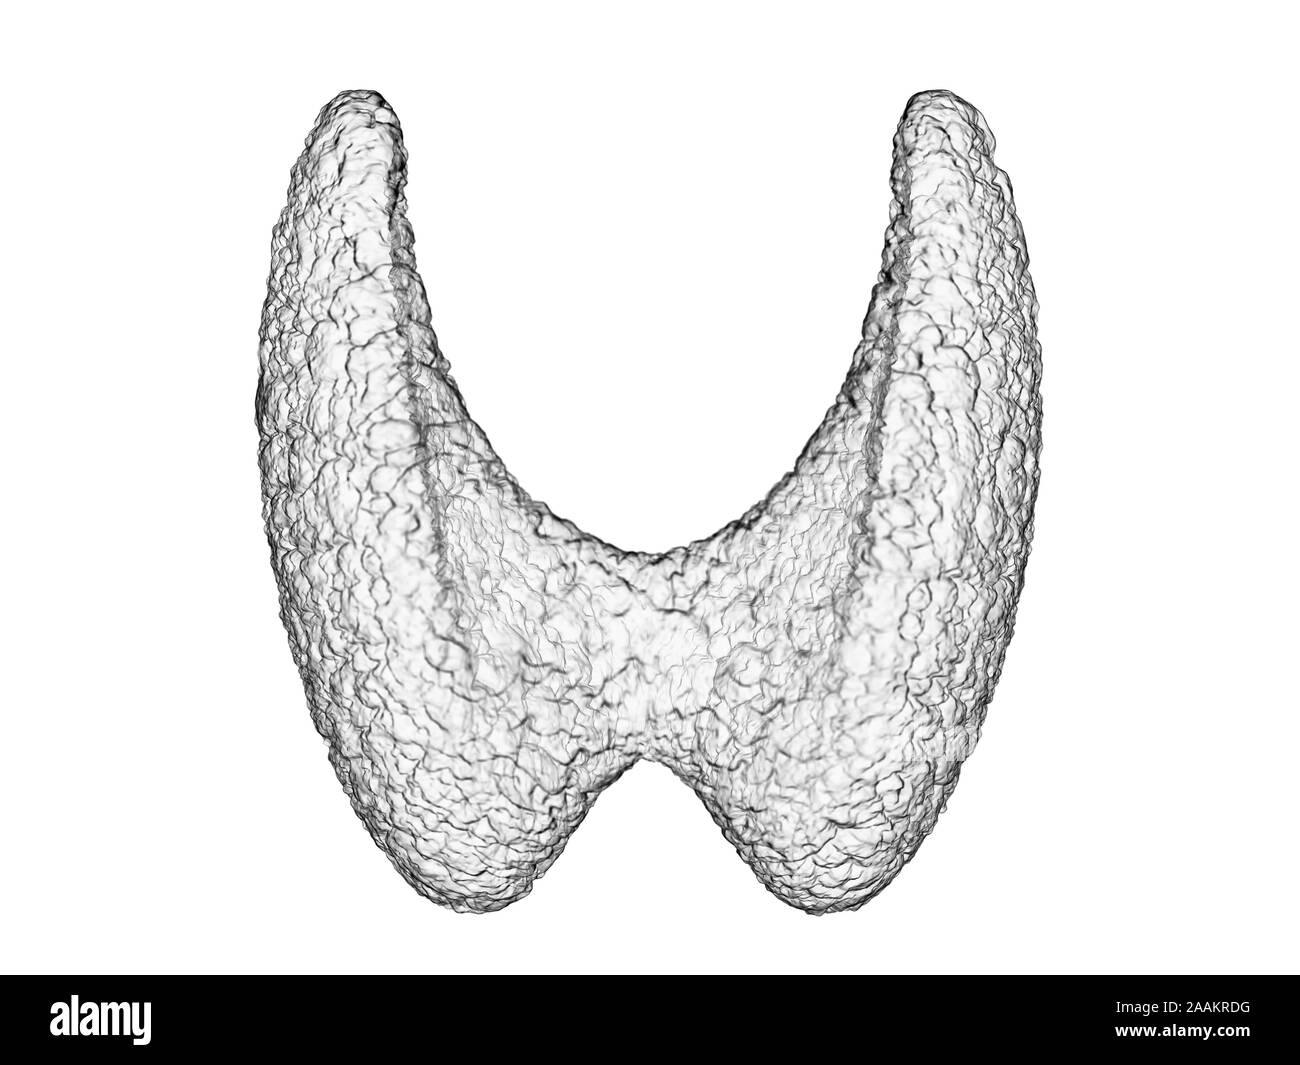 Thyroid gland, computer illustration. Stock Photo